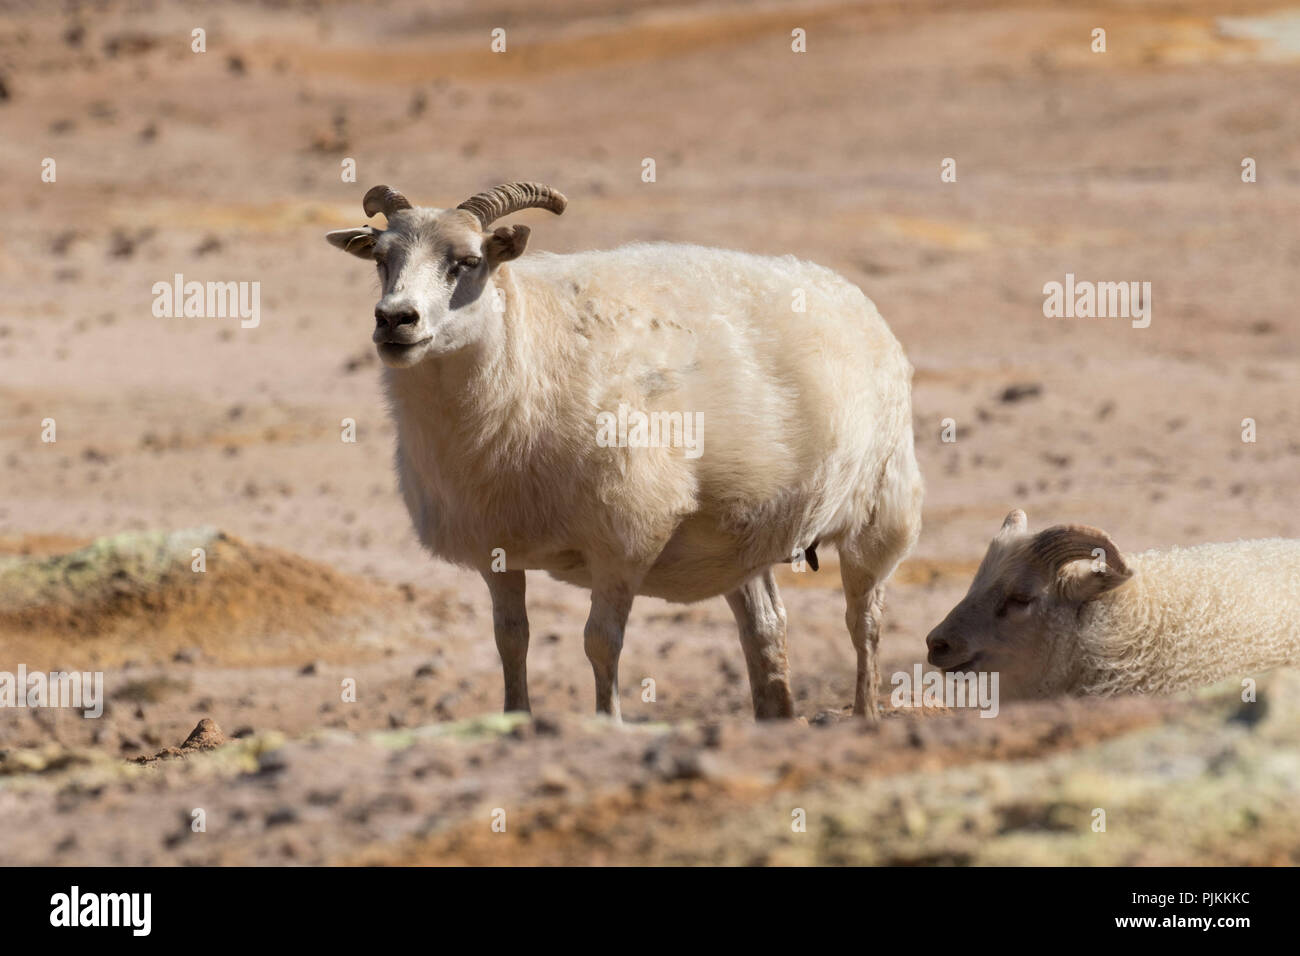 Iceland, Krafla area, sheep on hanging, lava landscape, ewe with young Stock Photo